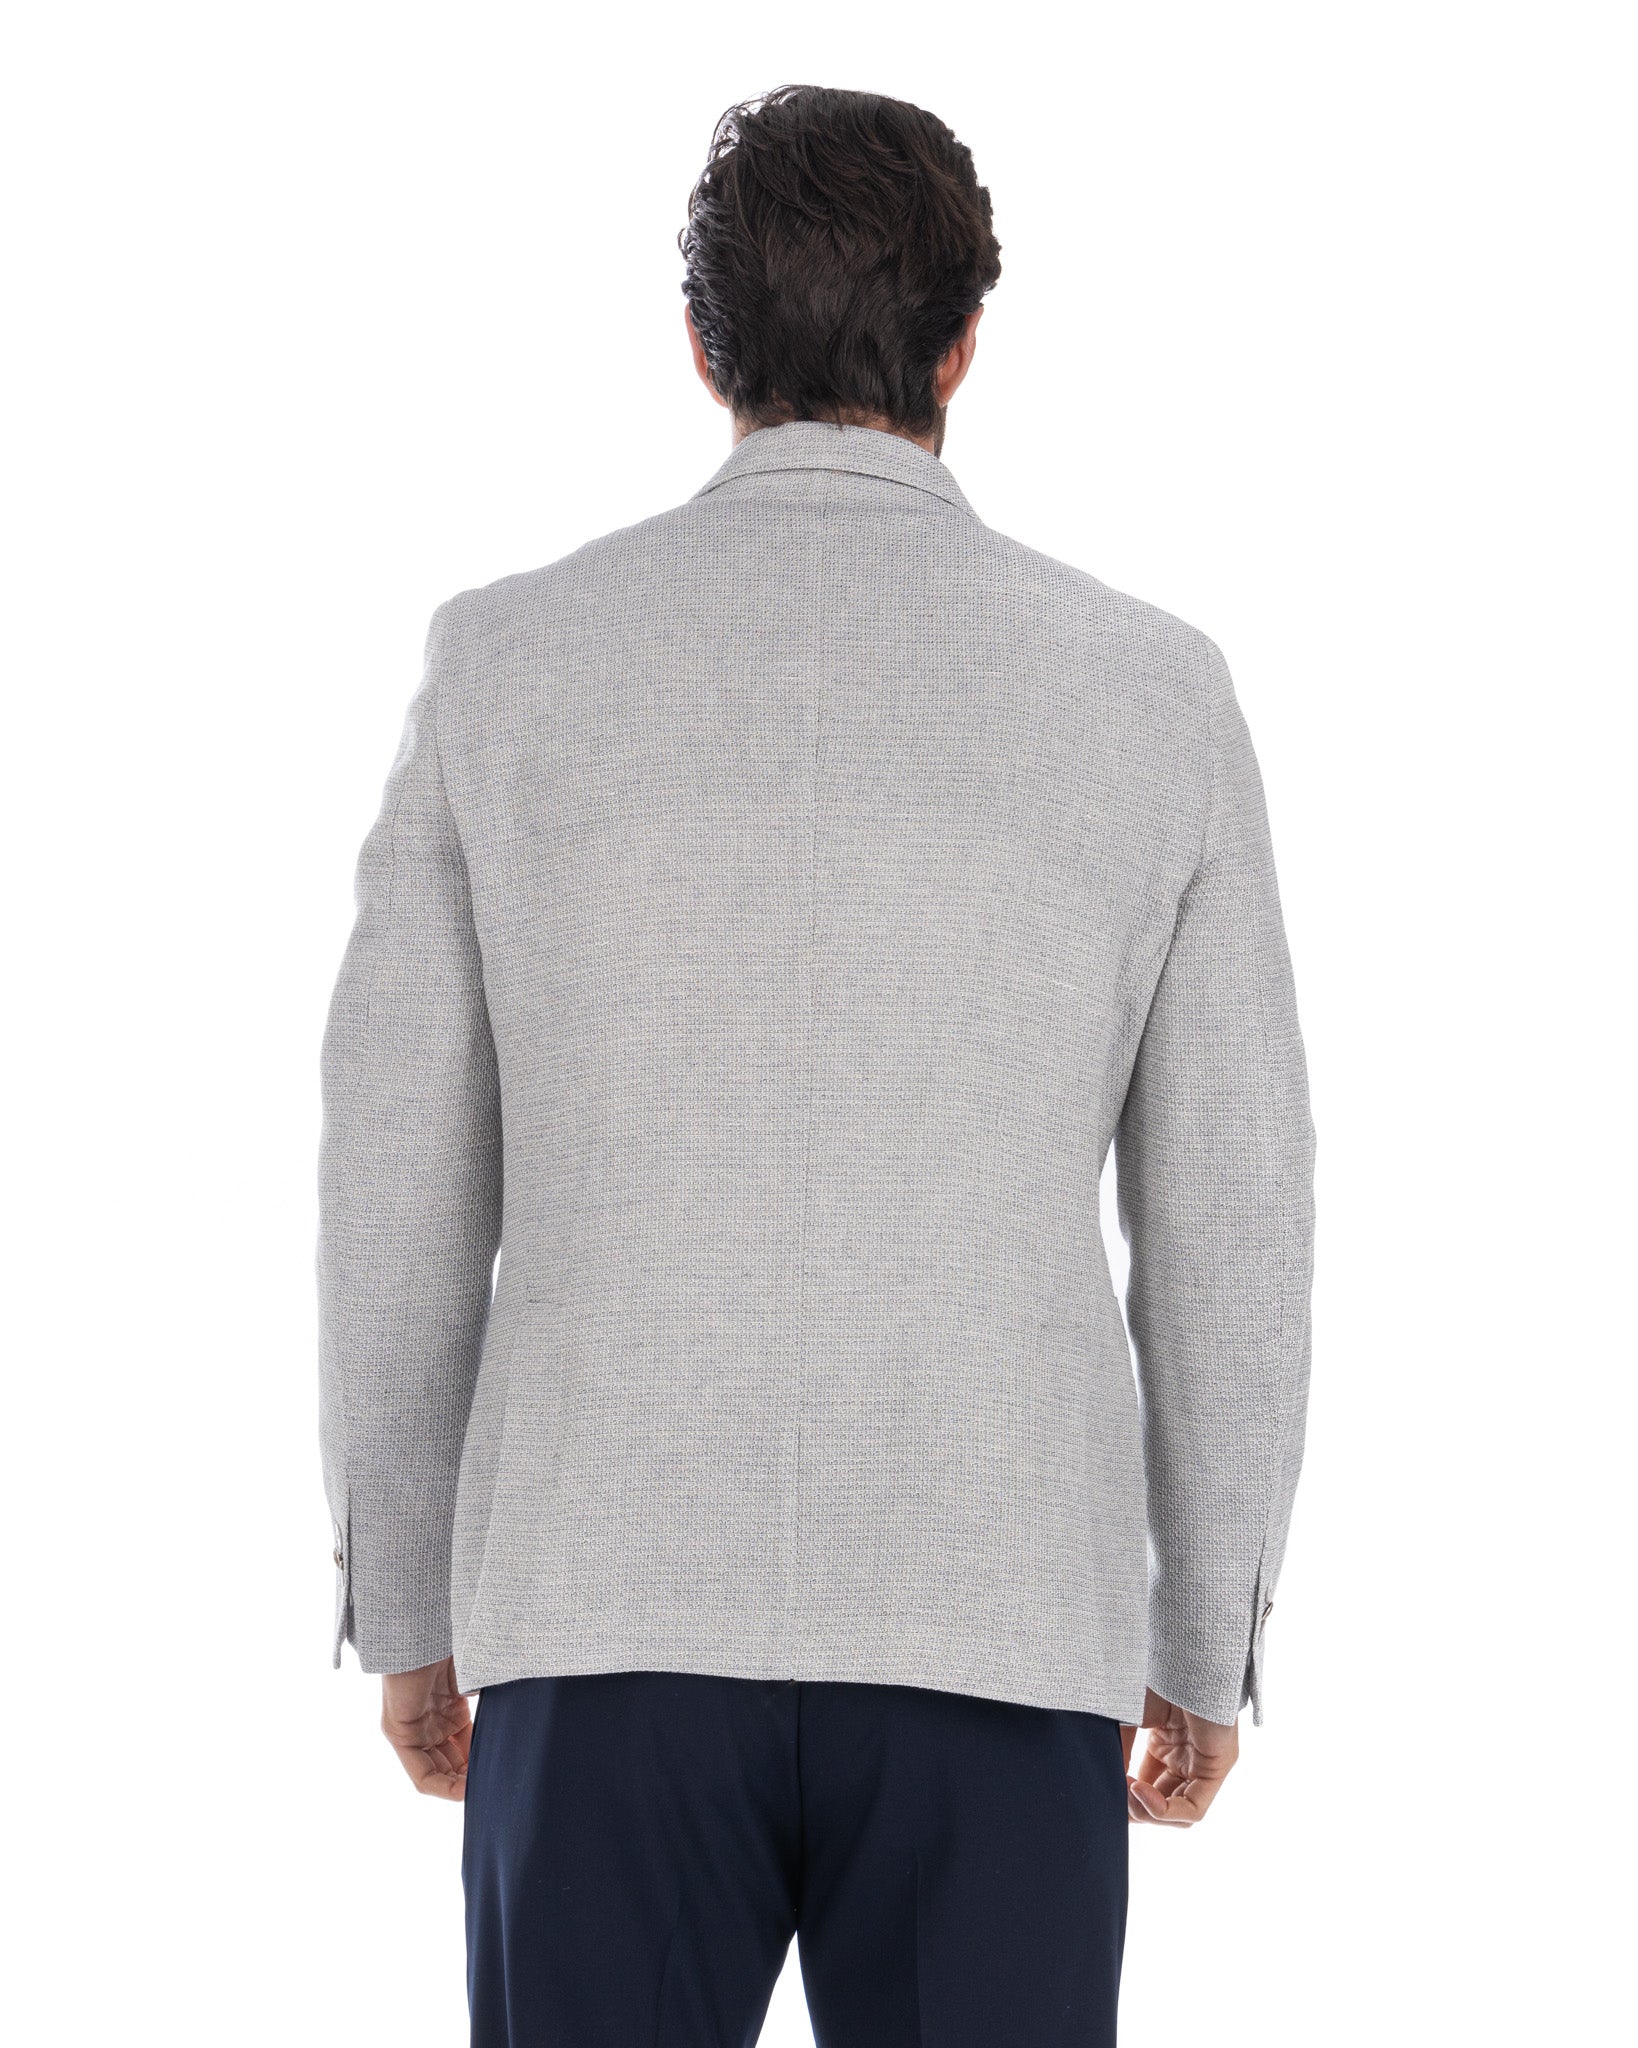 Leuca - gray double-breasted jacket